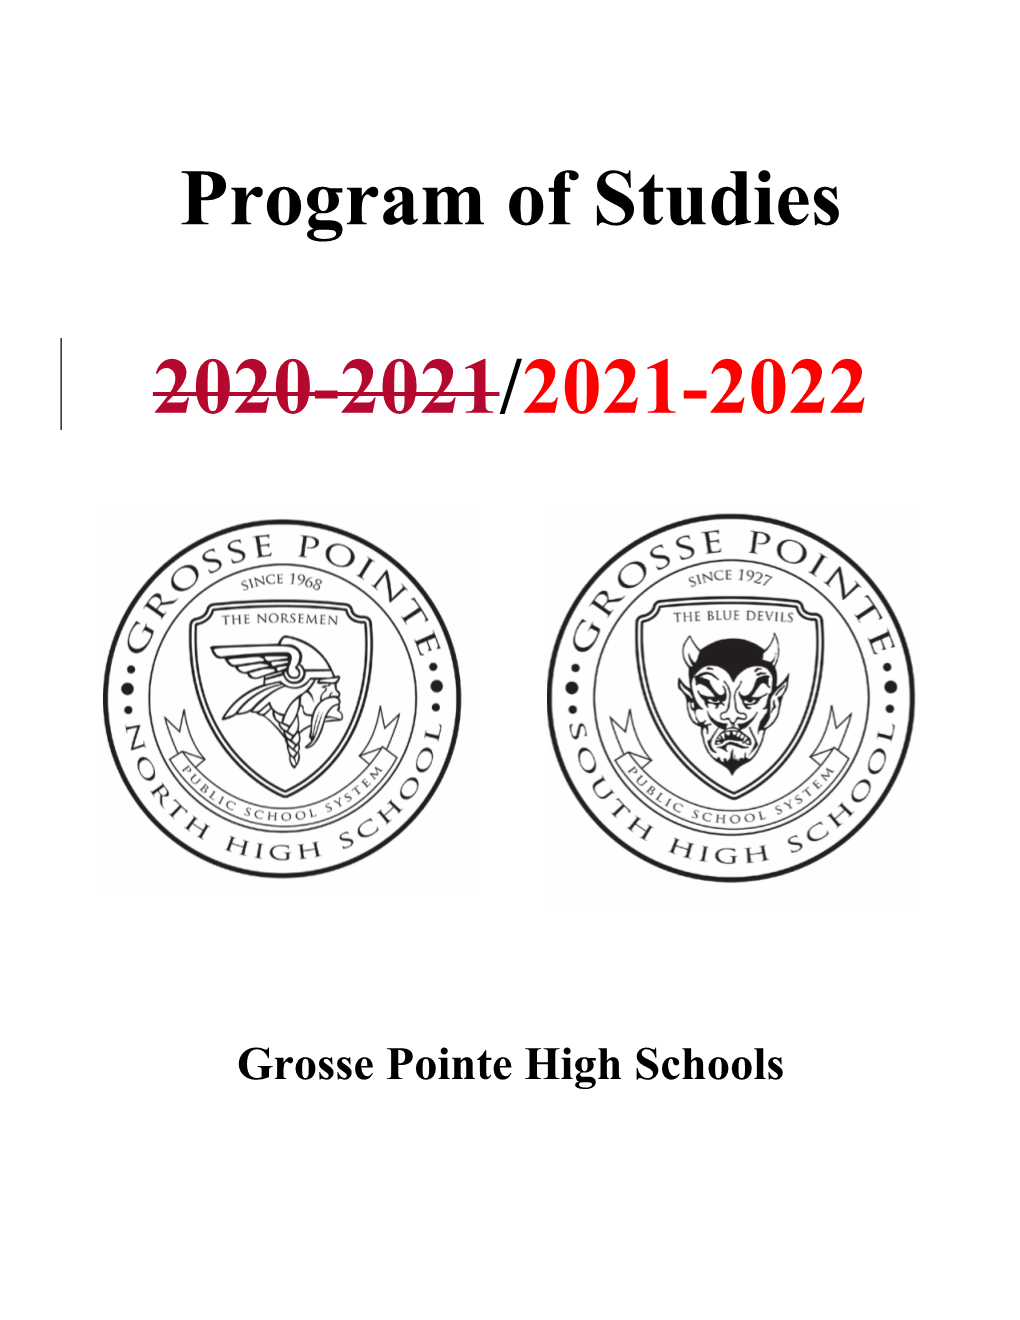 Program of Studies 2020-2021/2021-2022